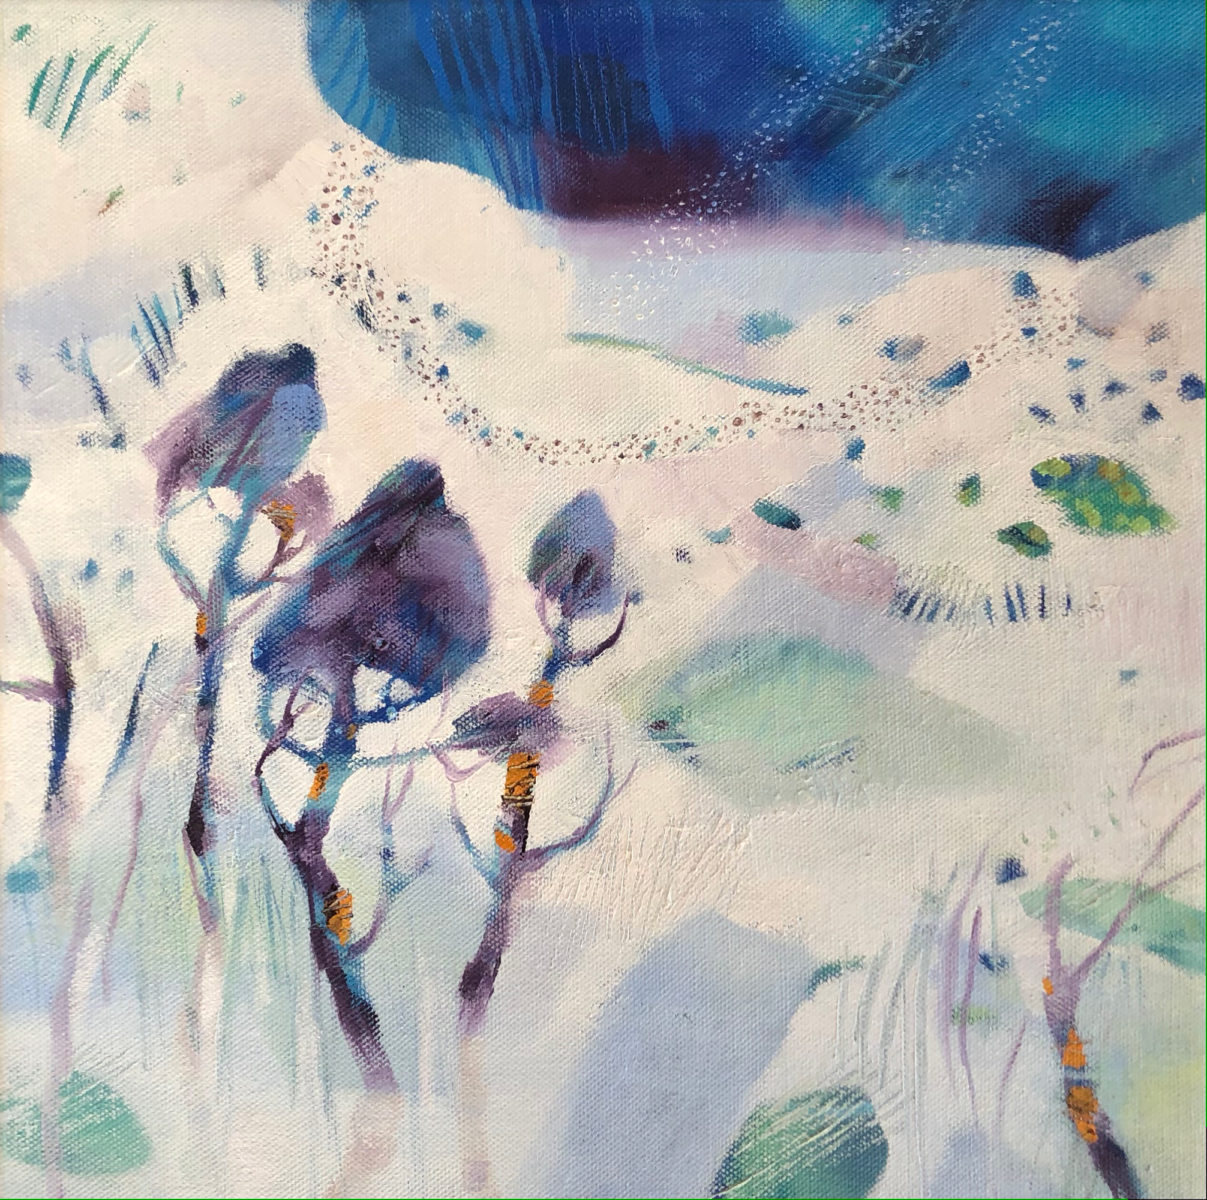 Tarn Shelf after snow Mt Field 2021 | Adrienne Williams | Oil on canvas | 30 x 30 cm | $850